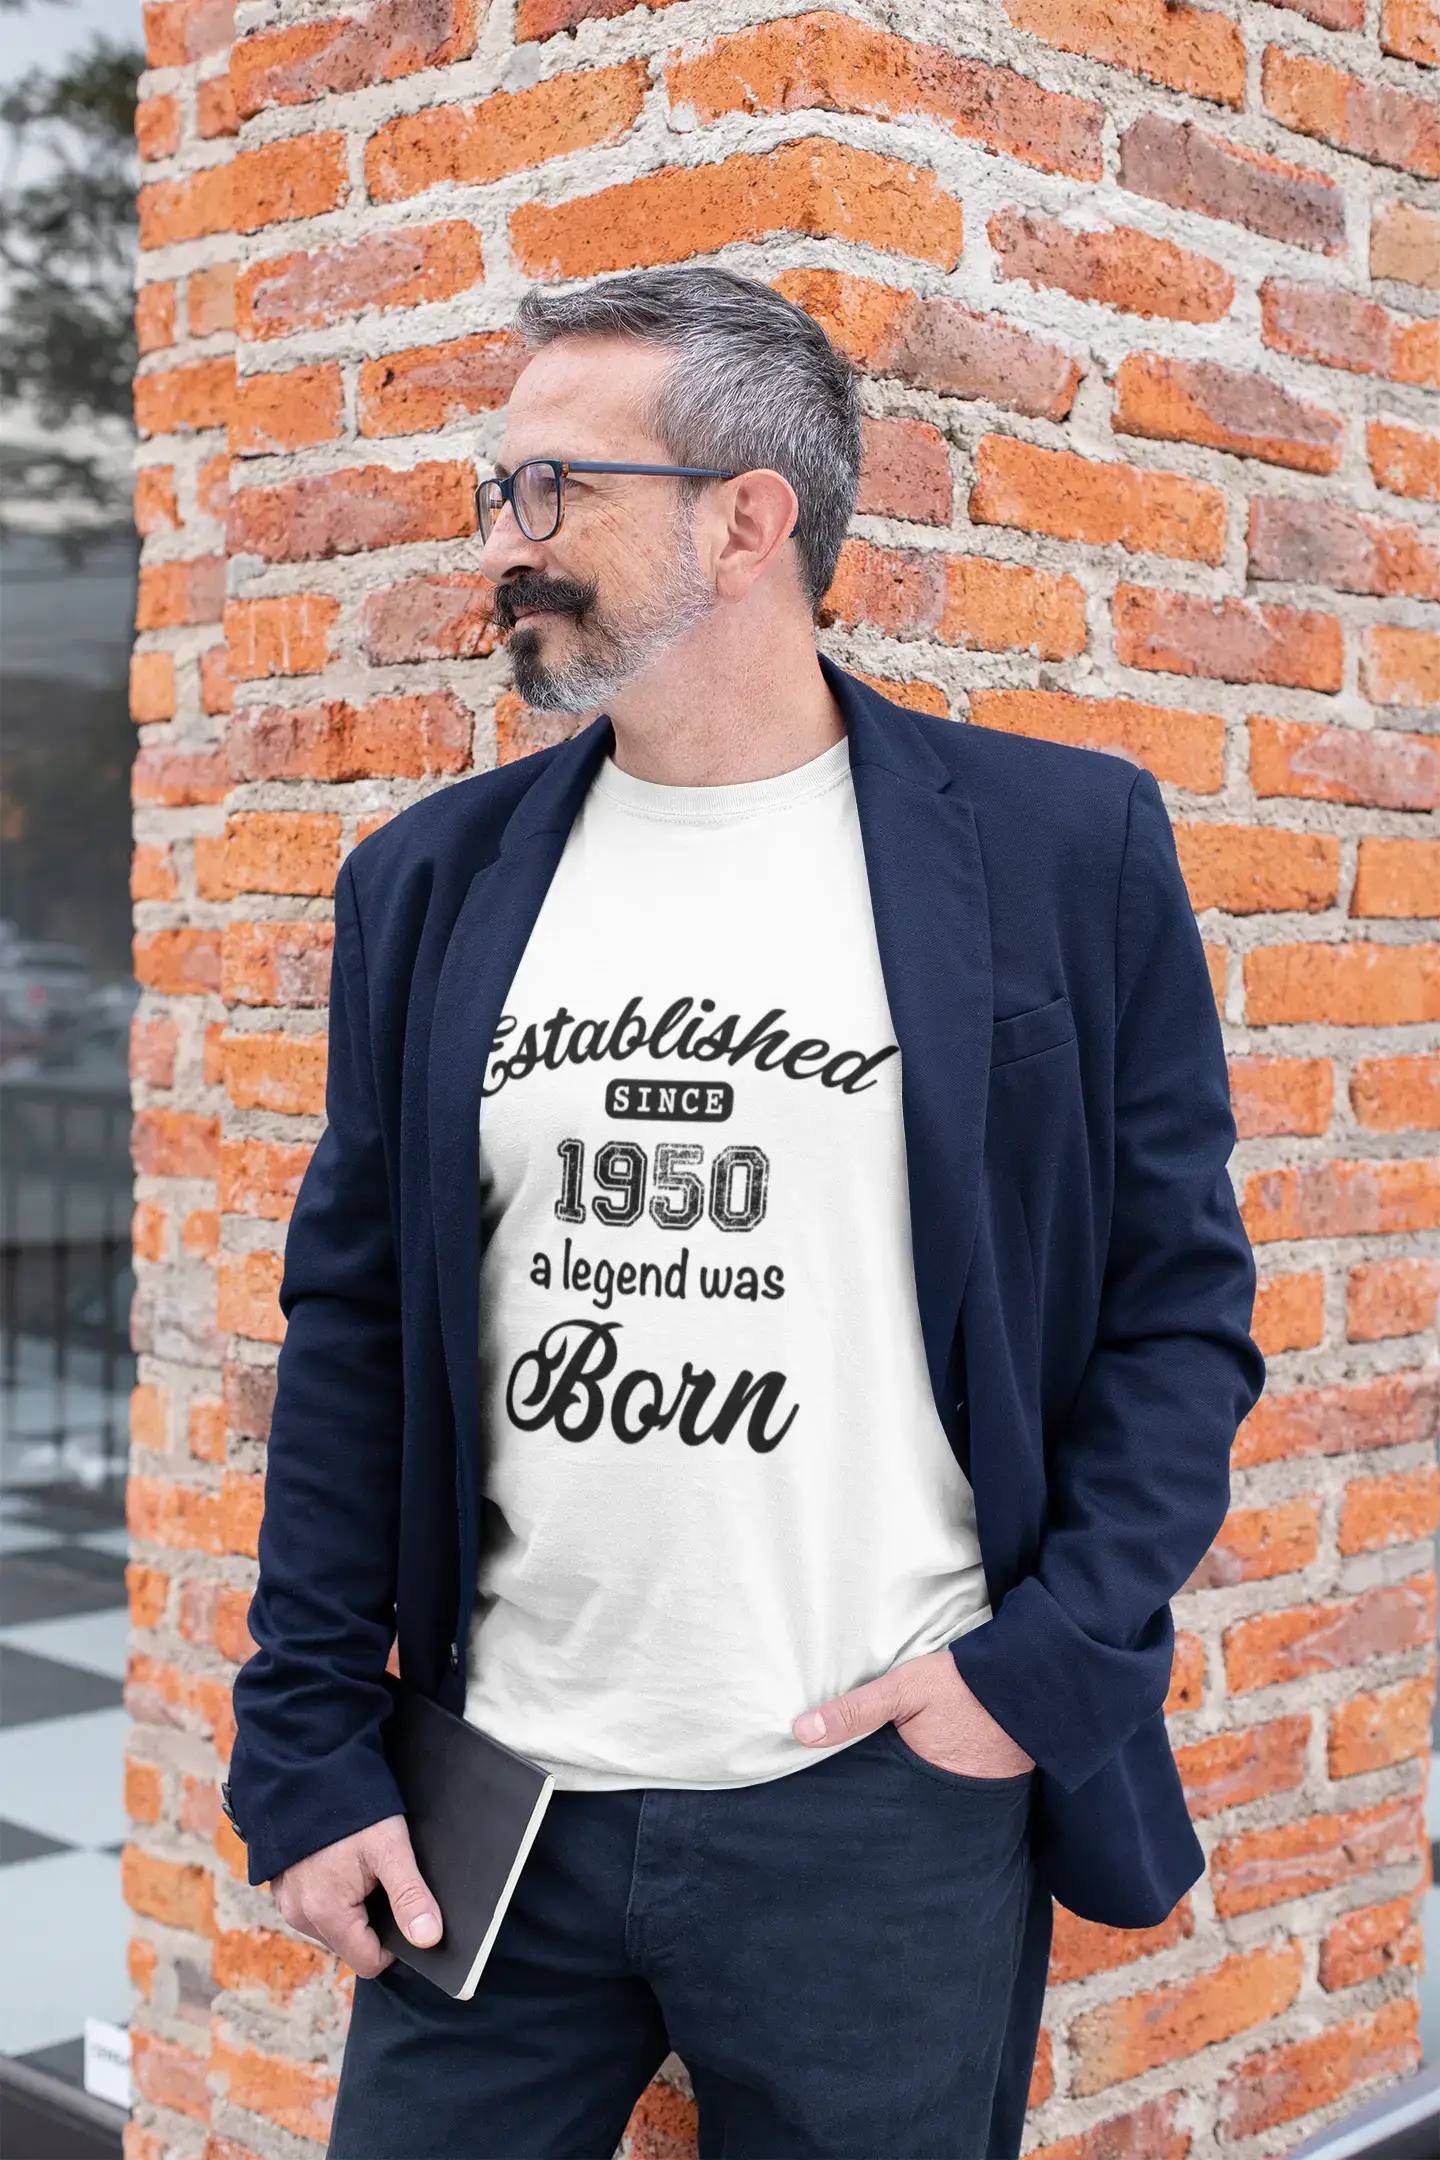 Established since 1950, Men's Short Sleeve Round Neck T-shirt 00095